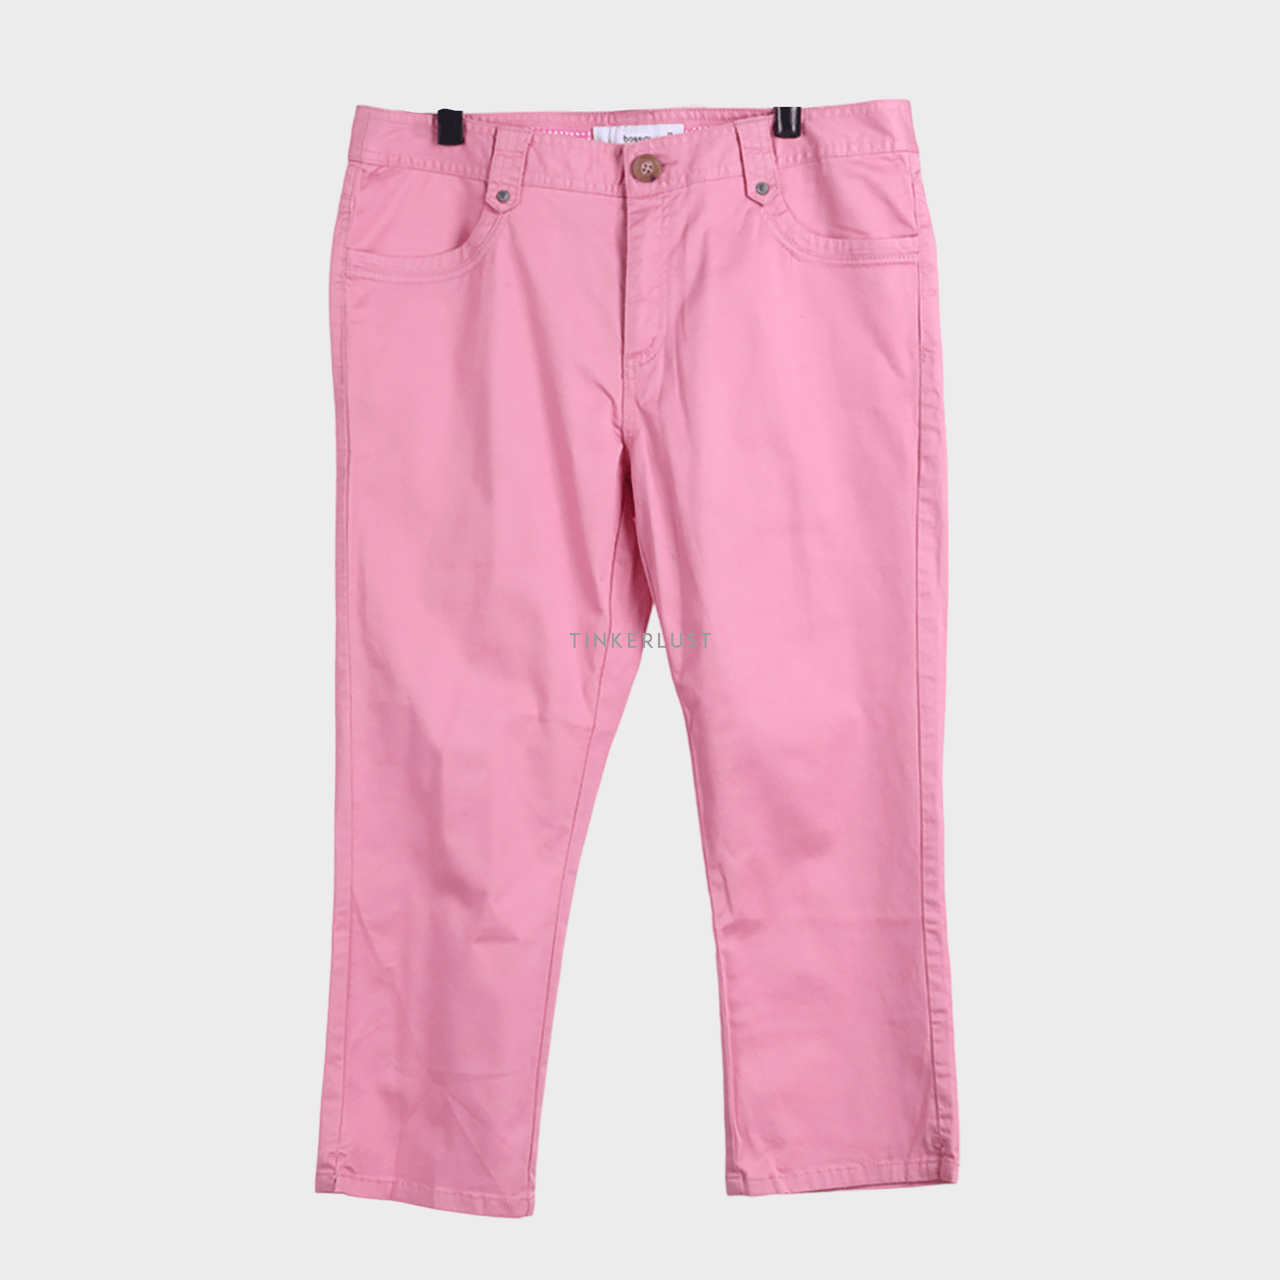 Bossini Pink Long Pants